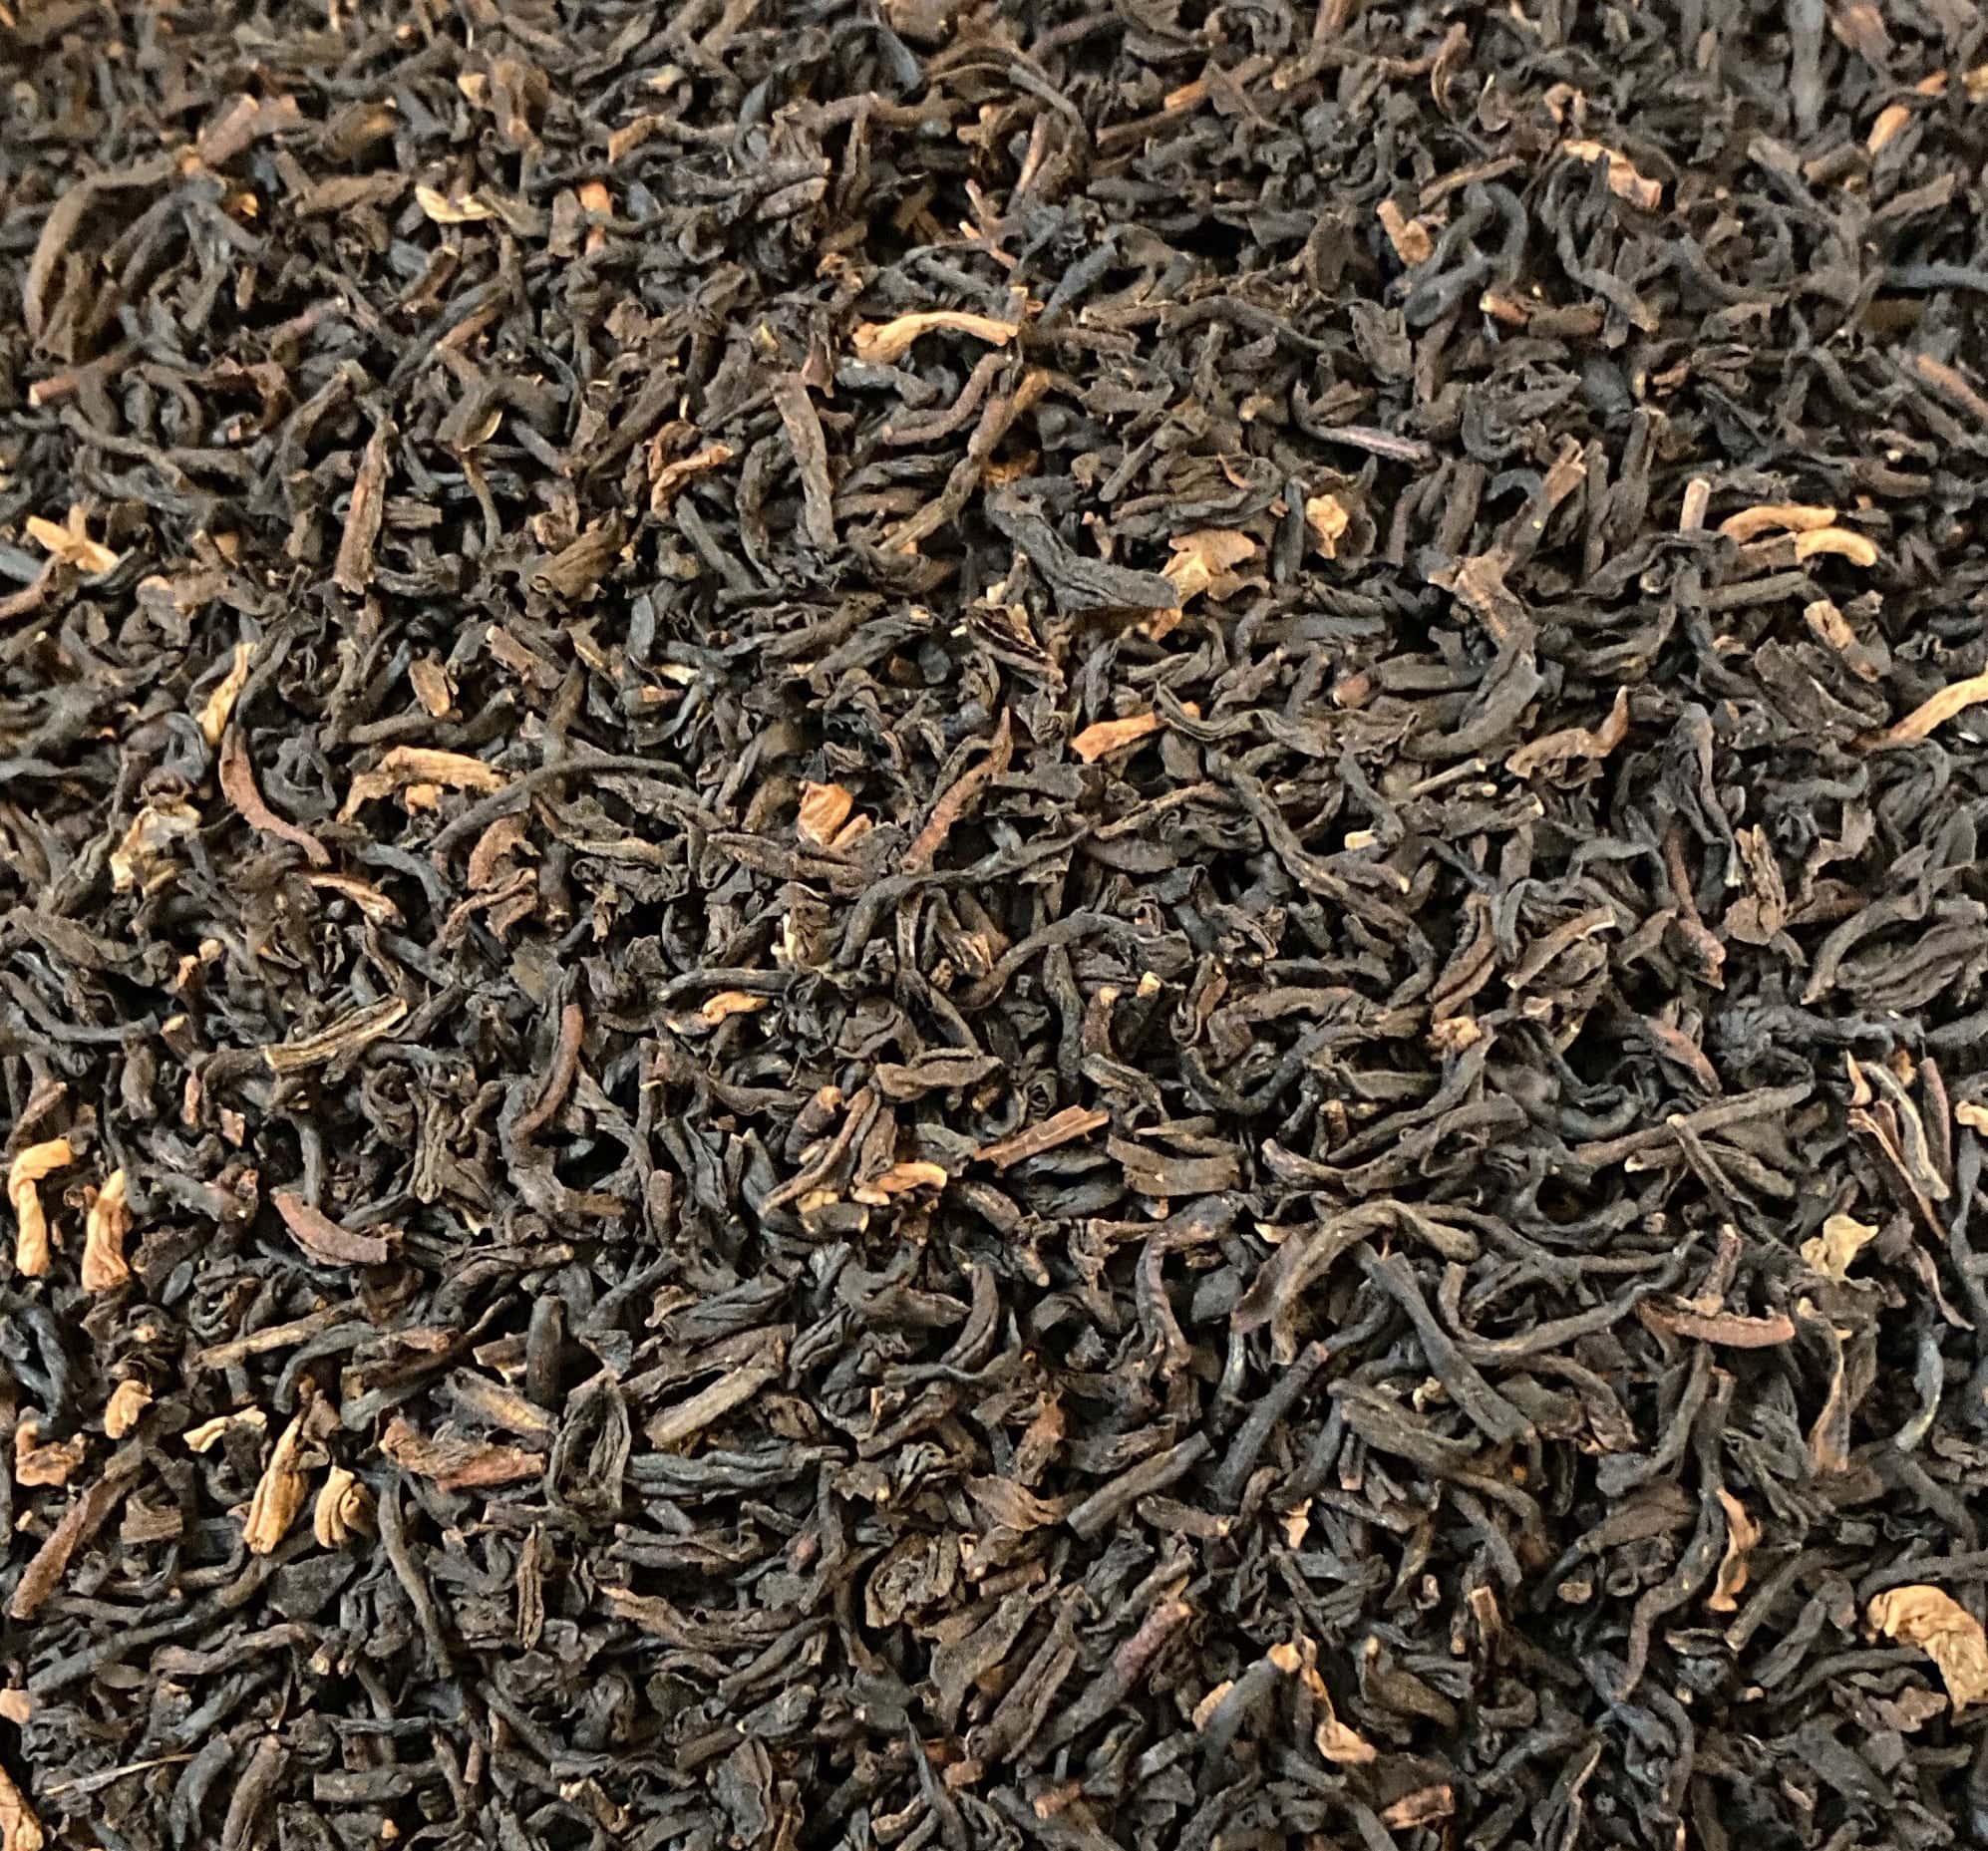 Decaf Black Currant - Infuse Tea Company